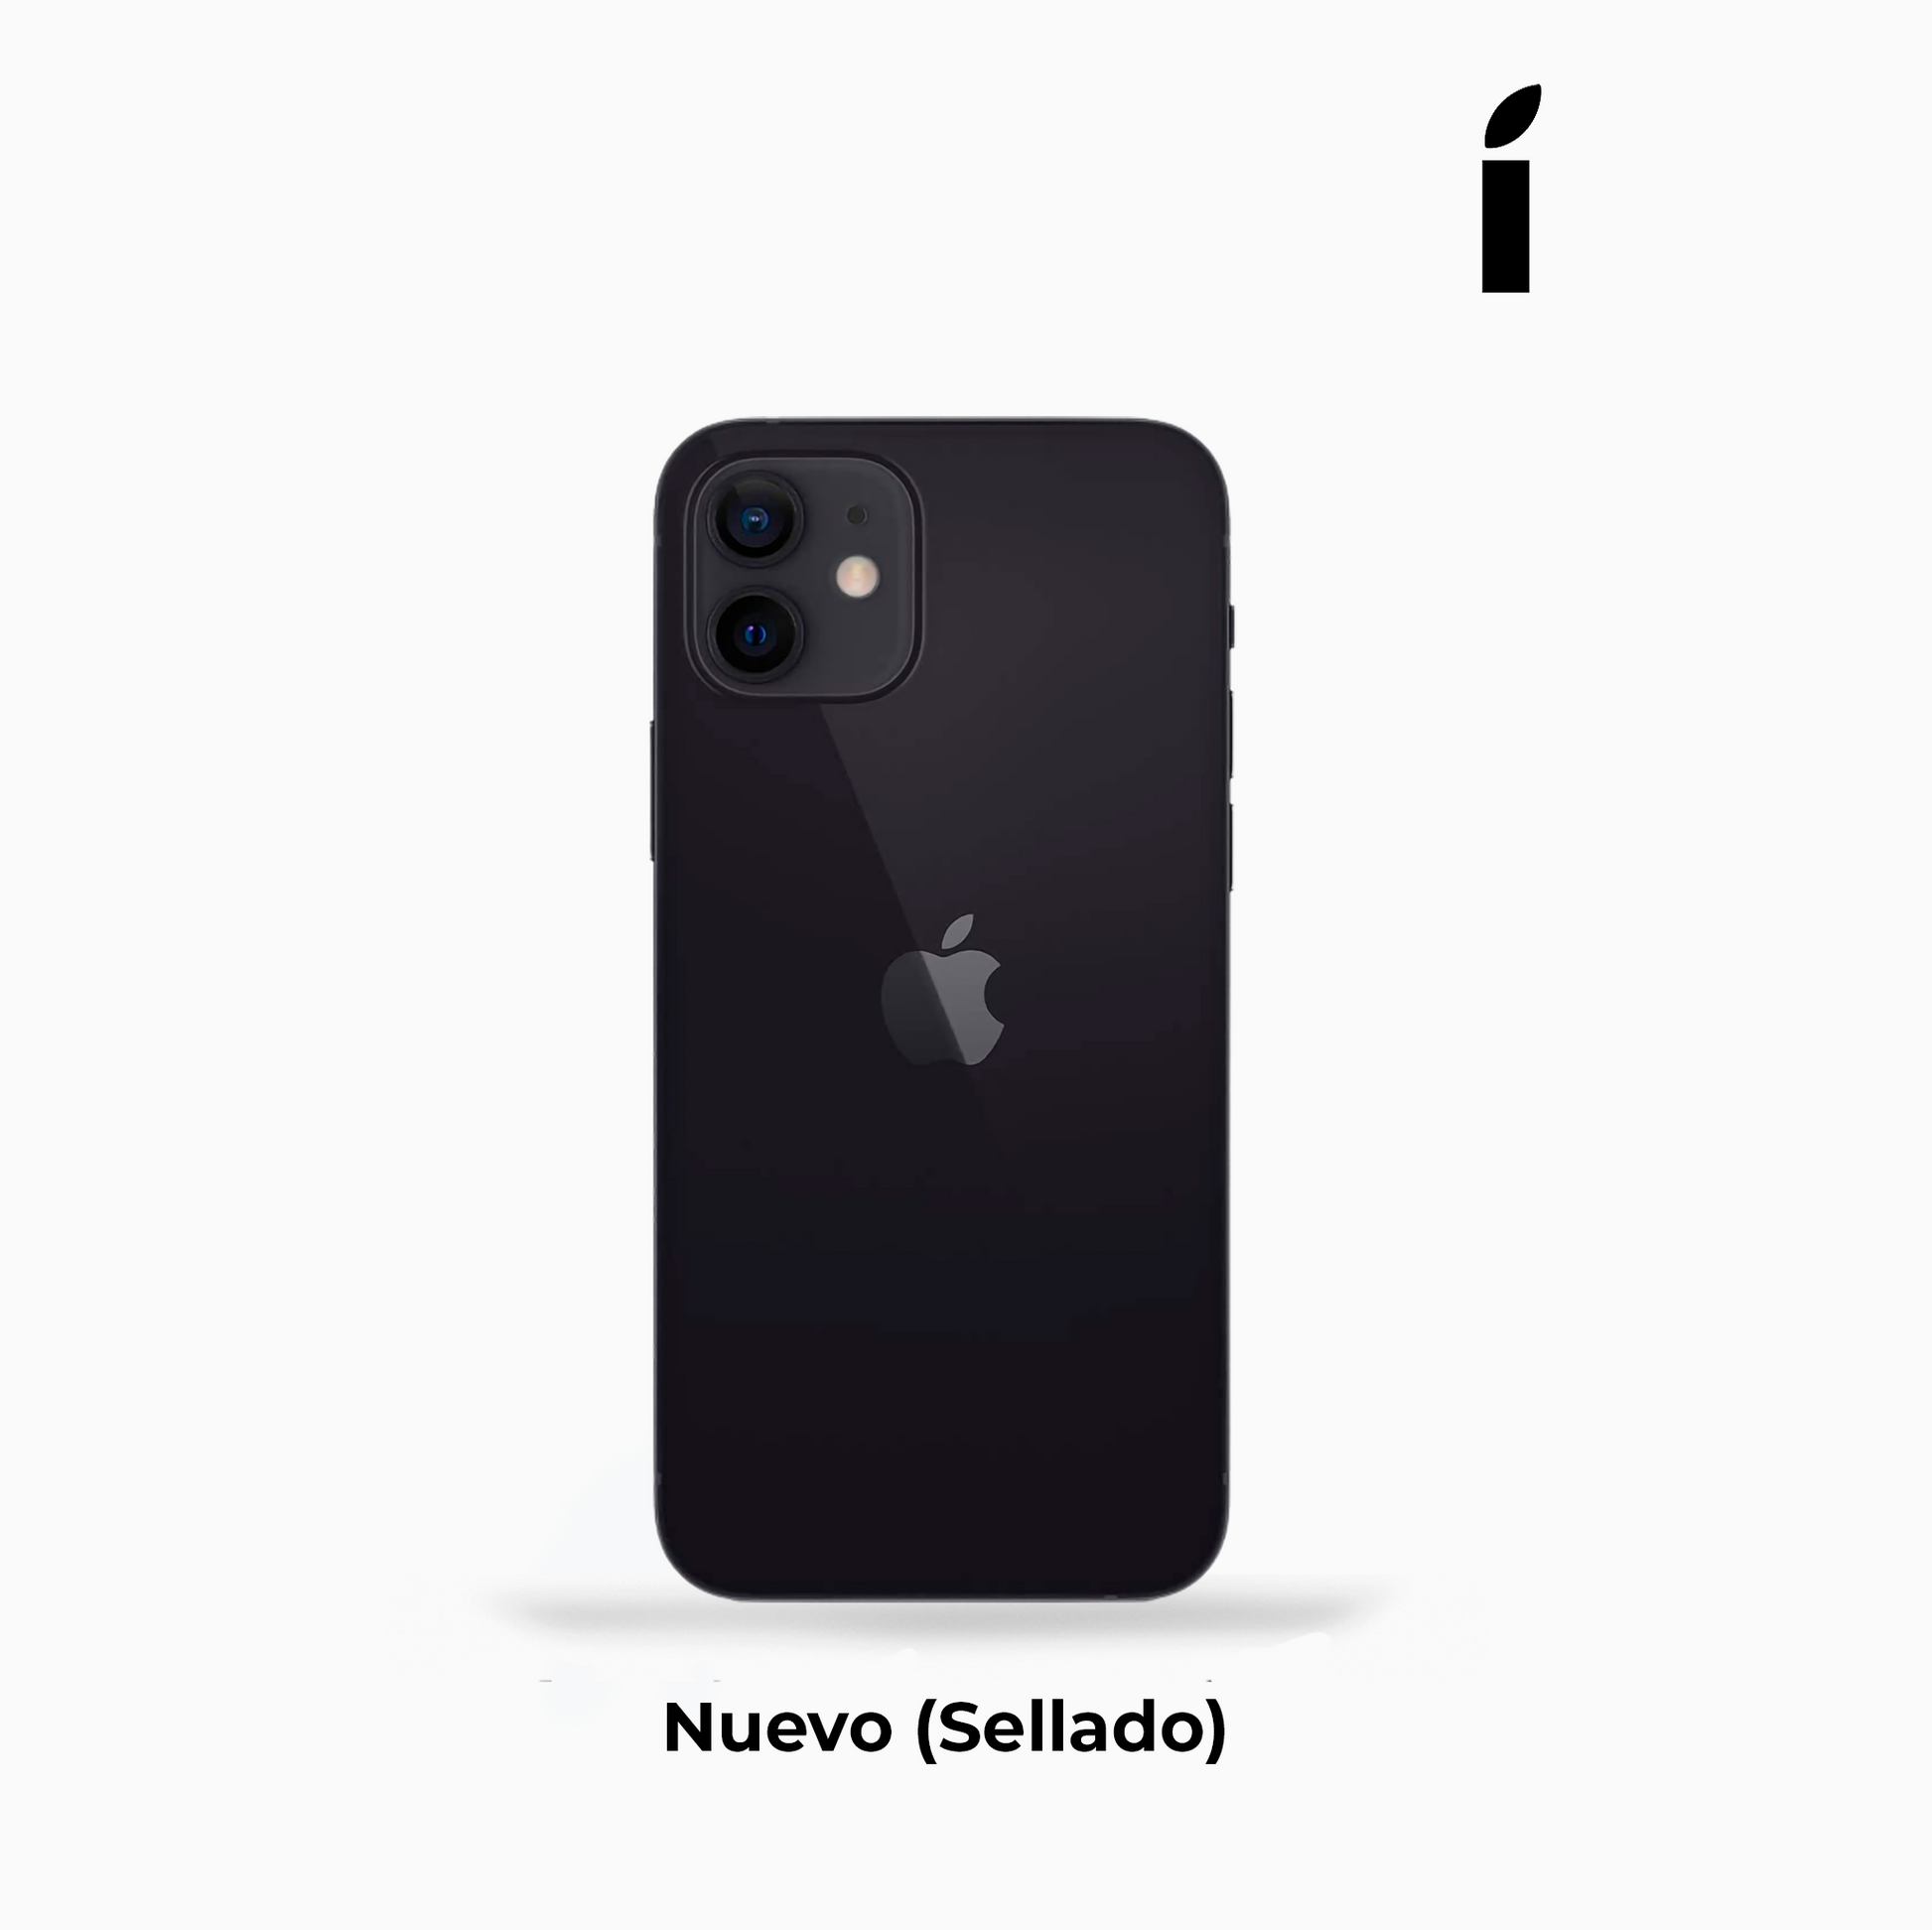 iPhone 12 Mini Nuevo – iPhonizate